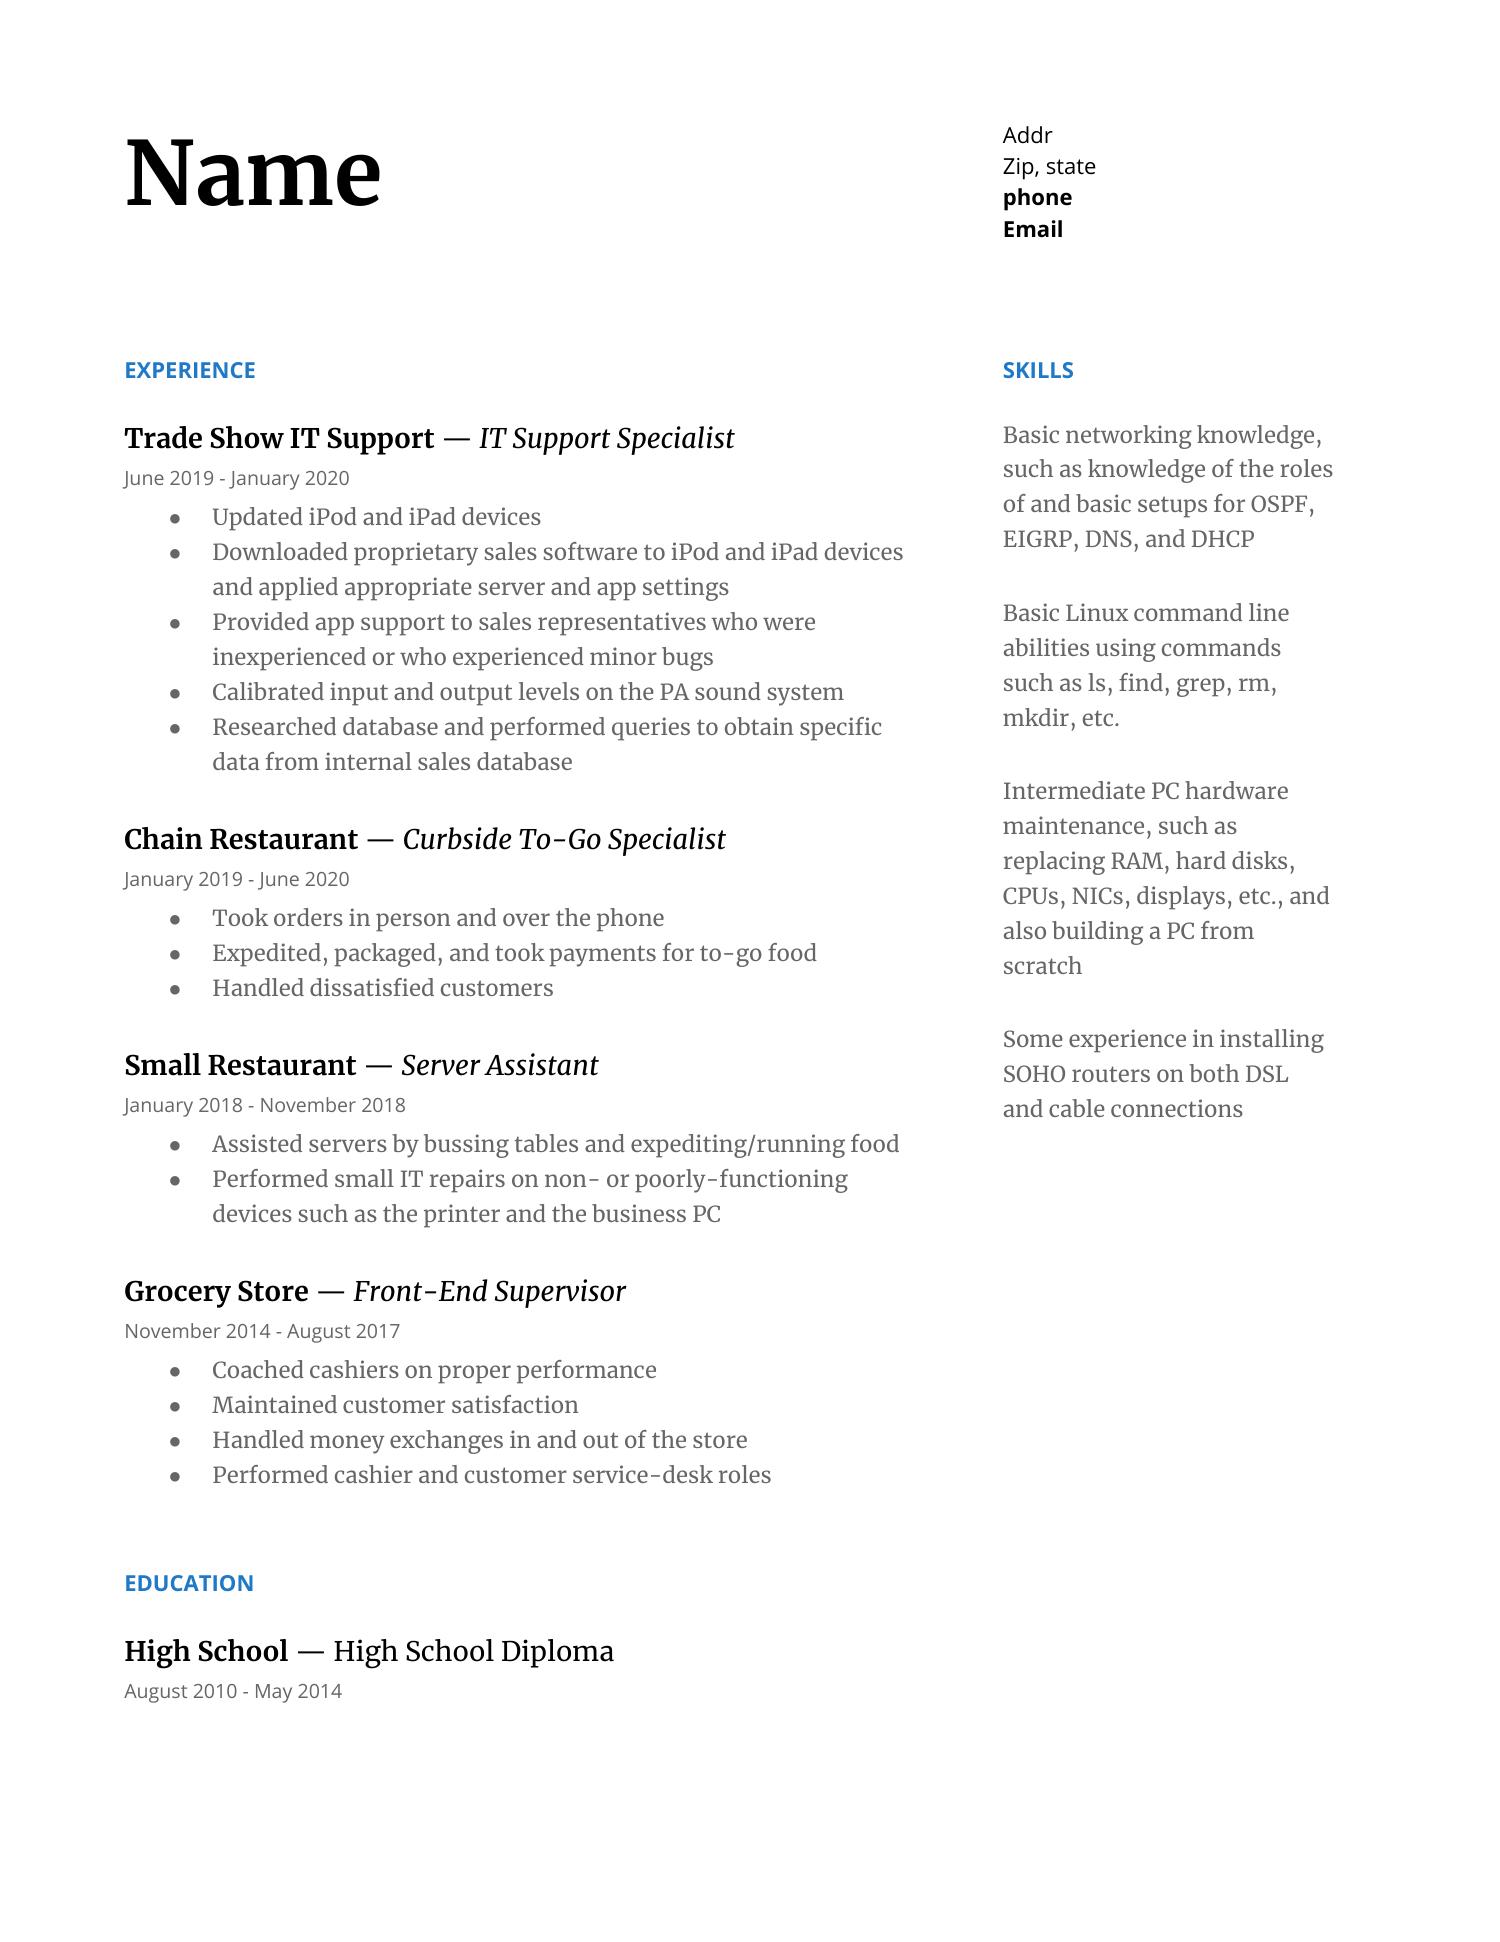 Copy of Resume.pdf | DocDroid